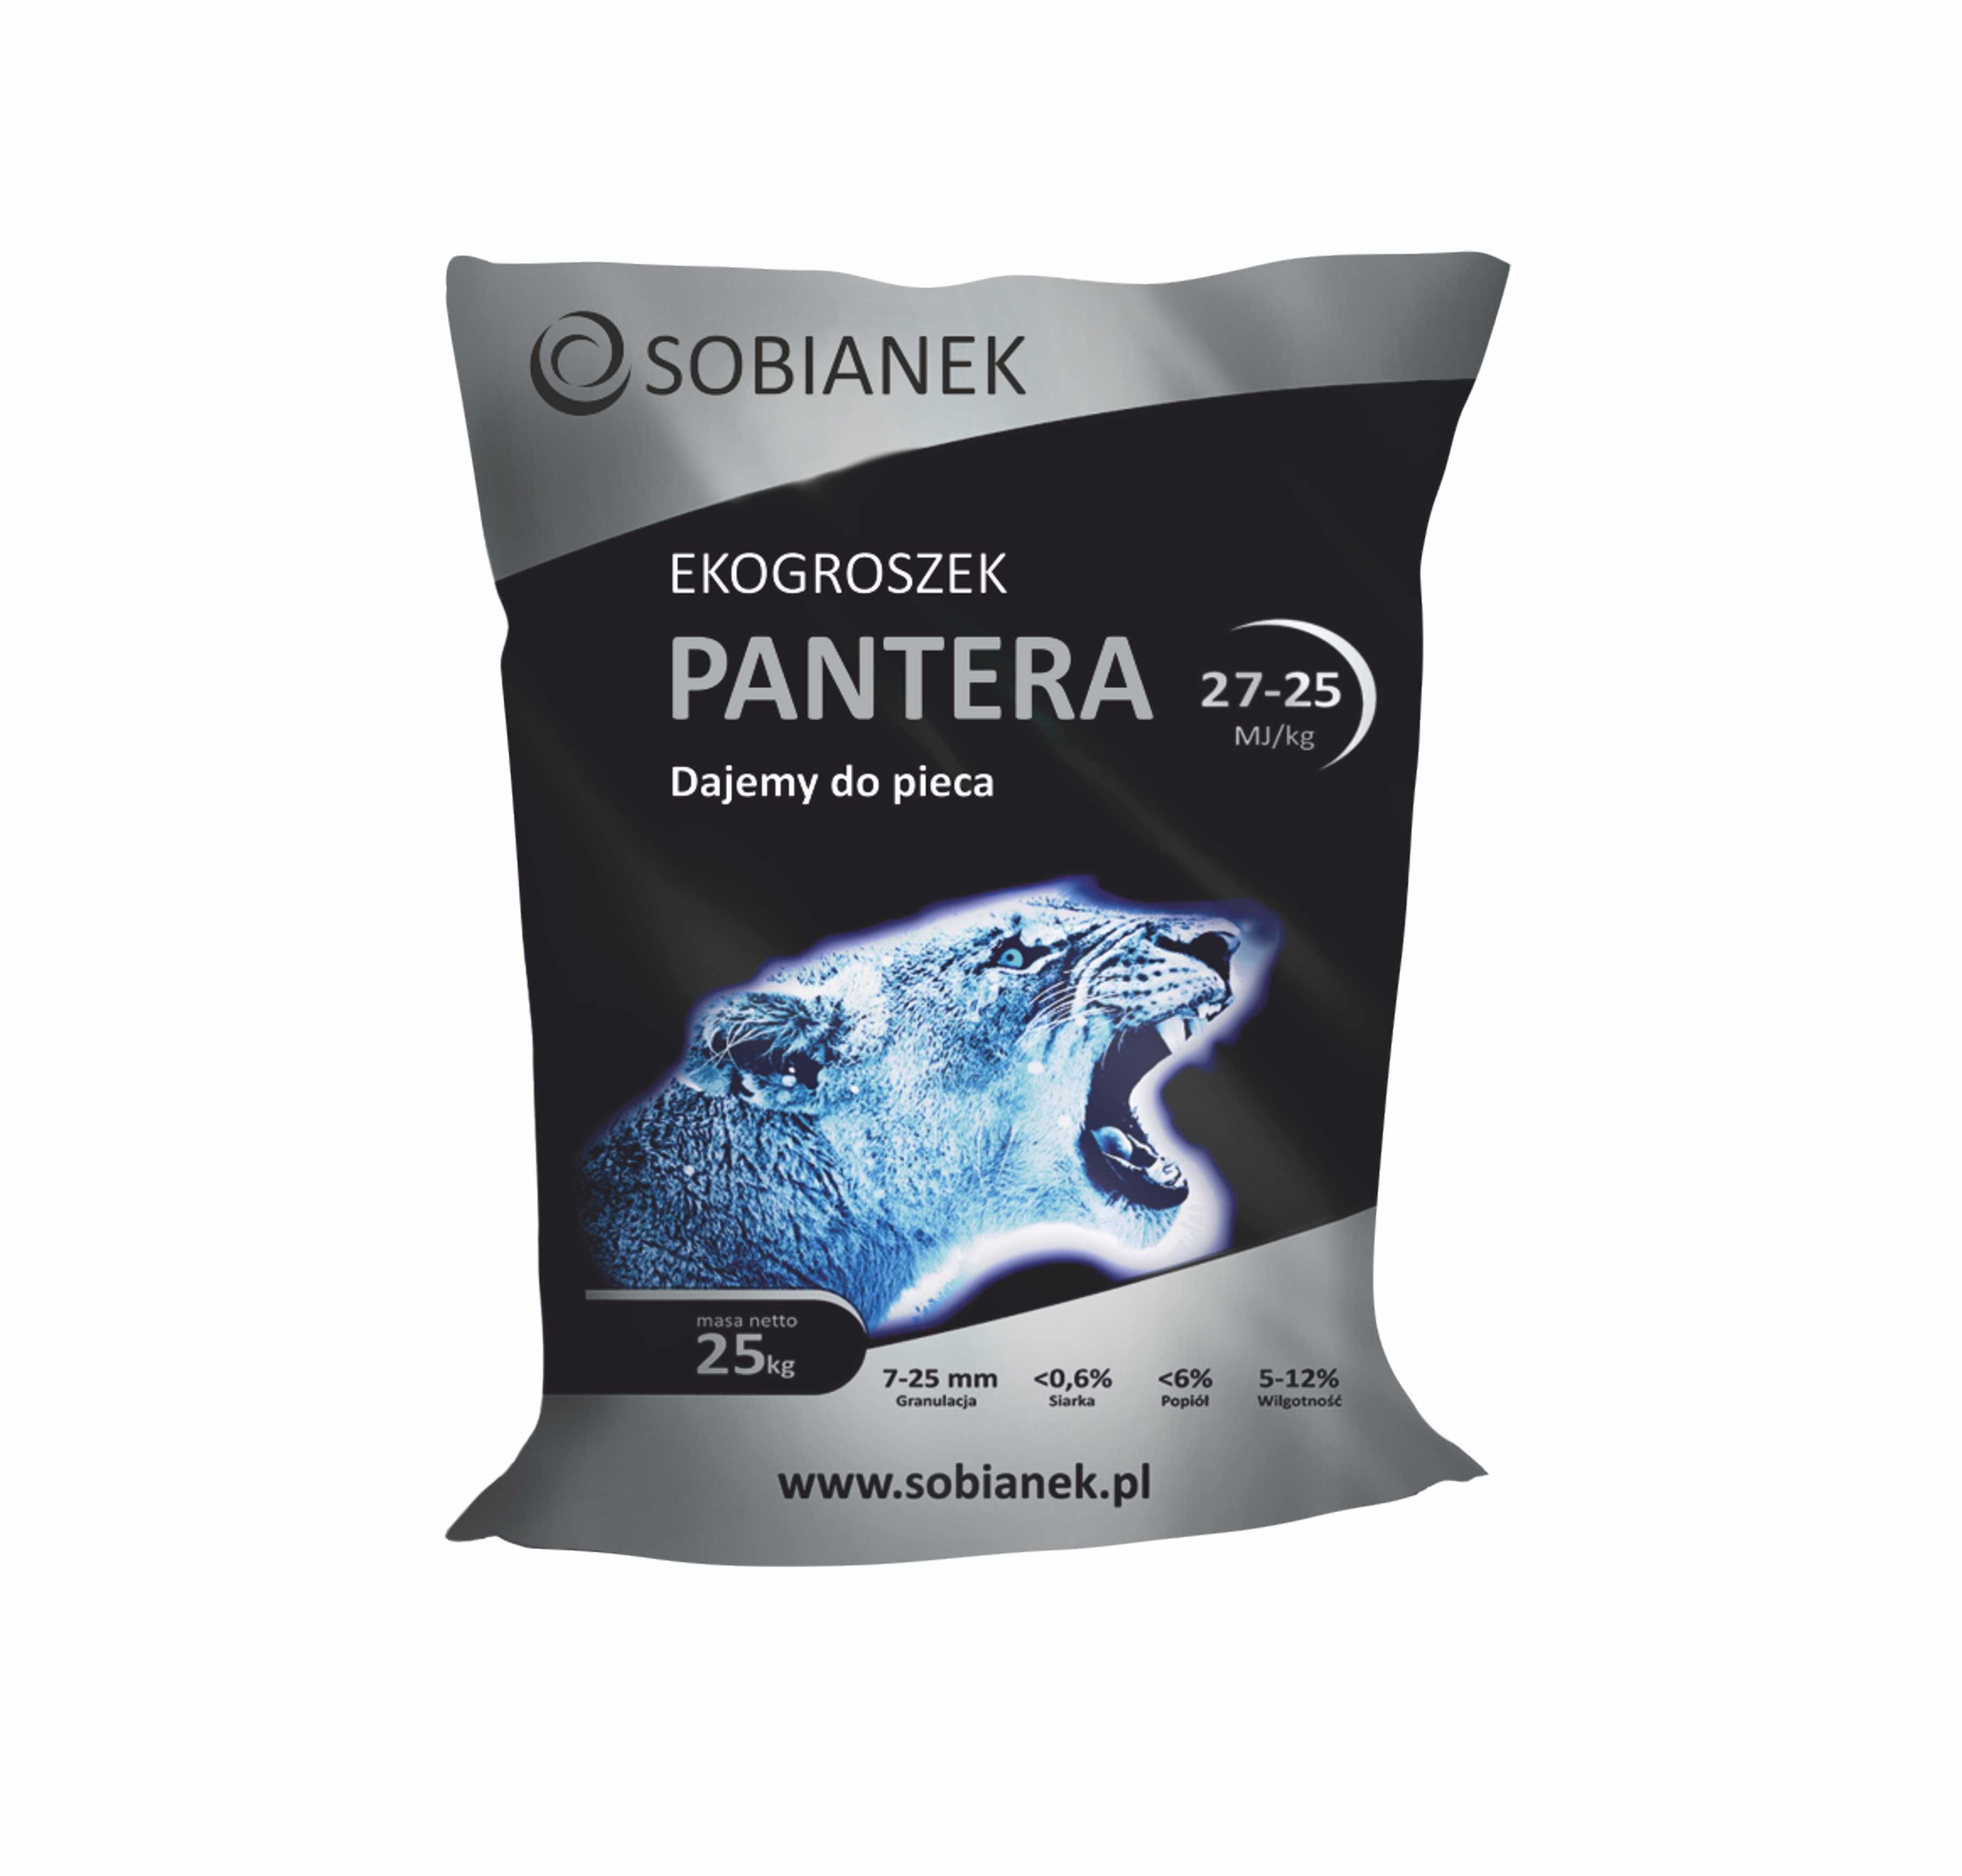 Ekogroszek PANTERA Sobianek 27-25mj/kg 1t darmowa dostawa